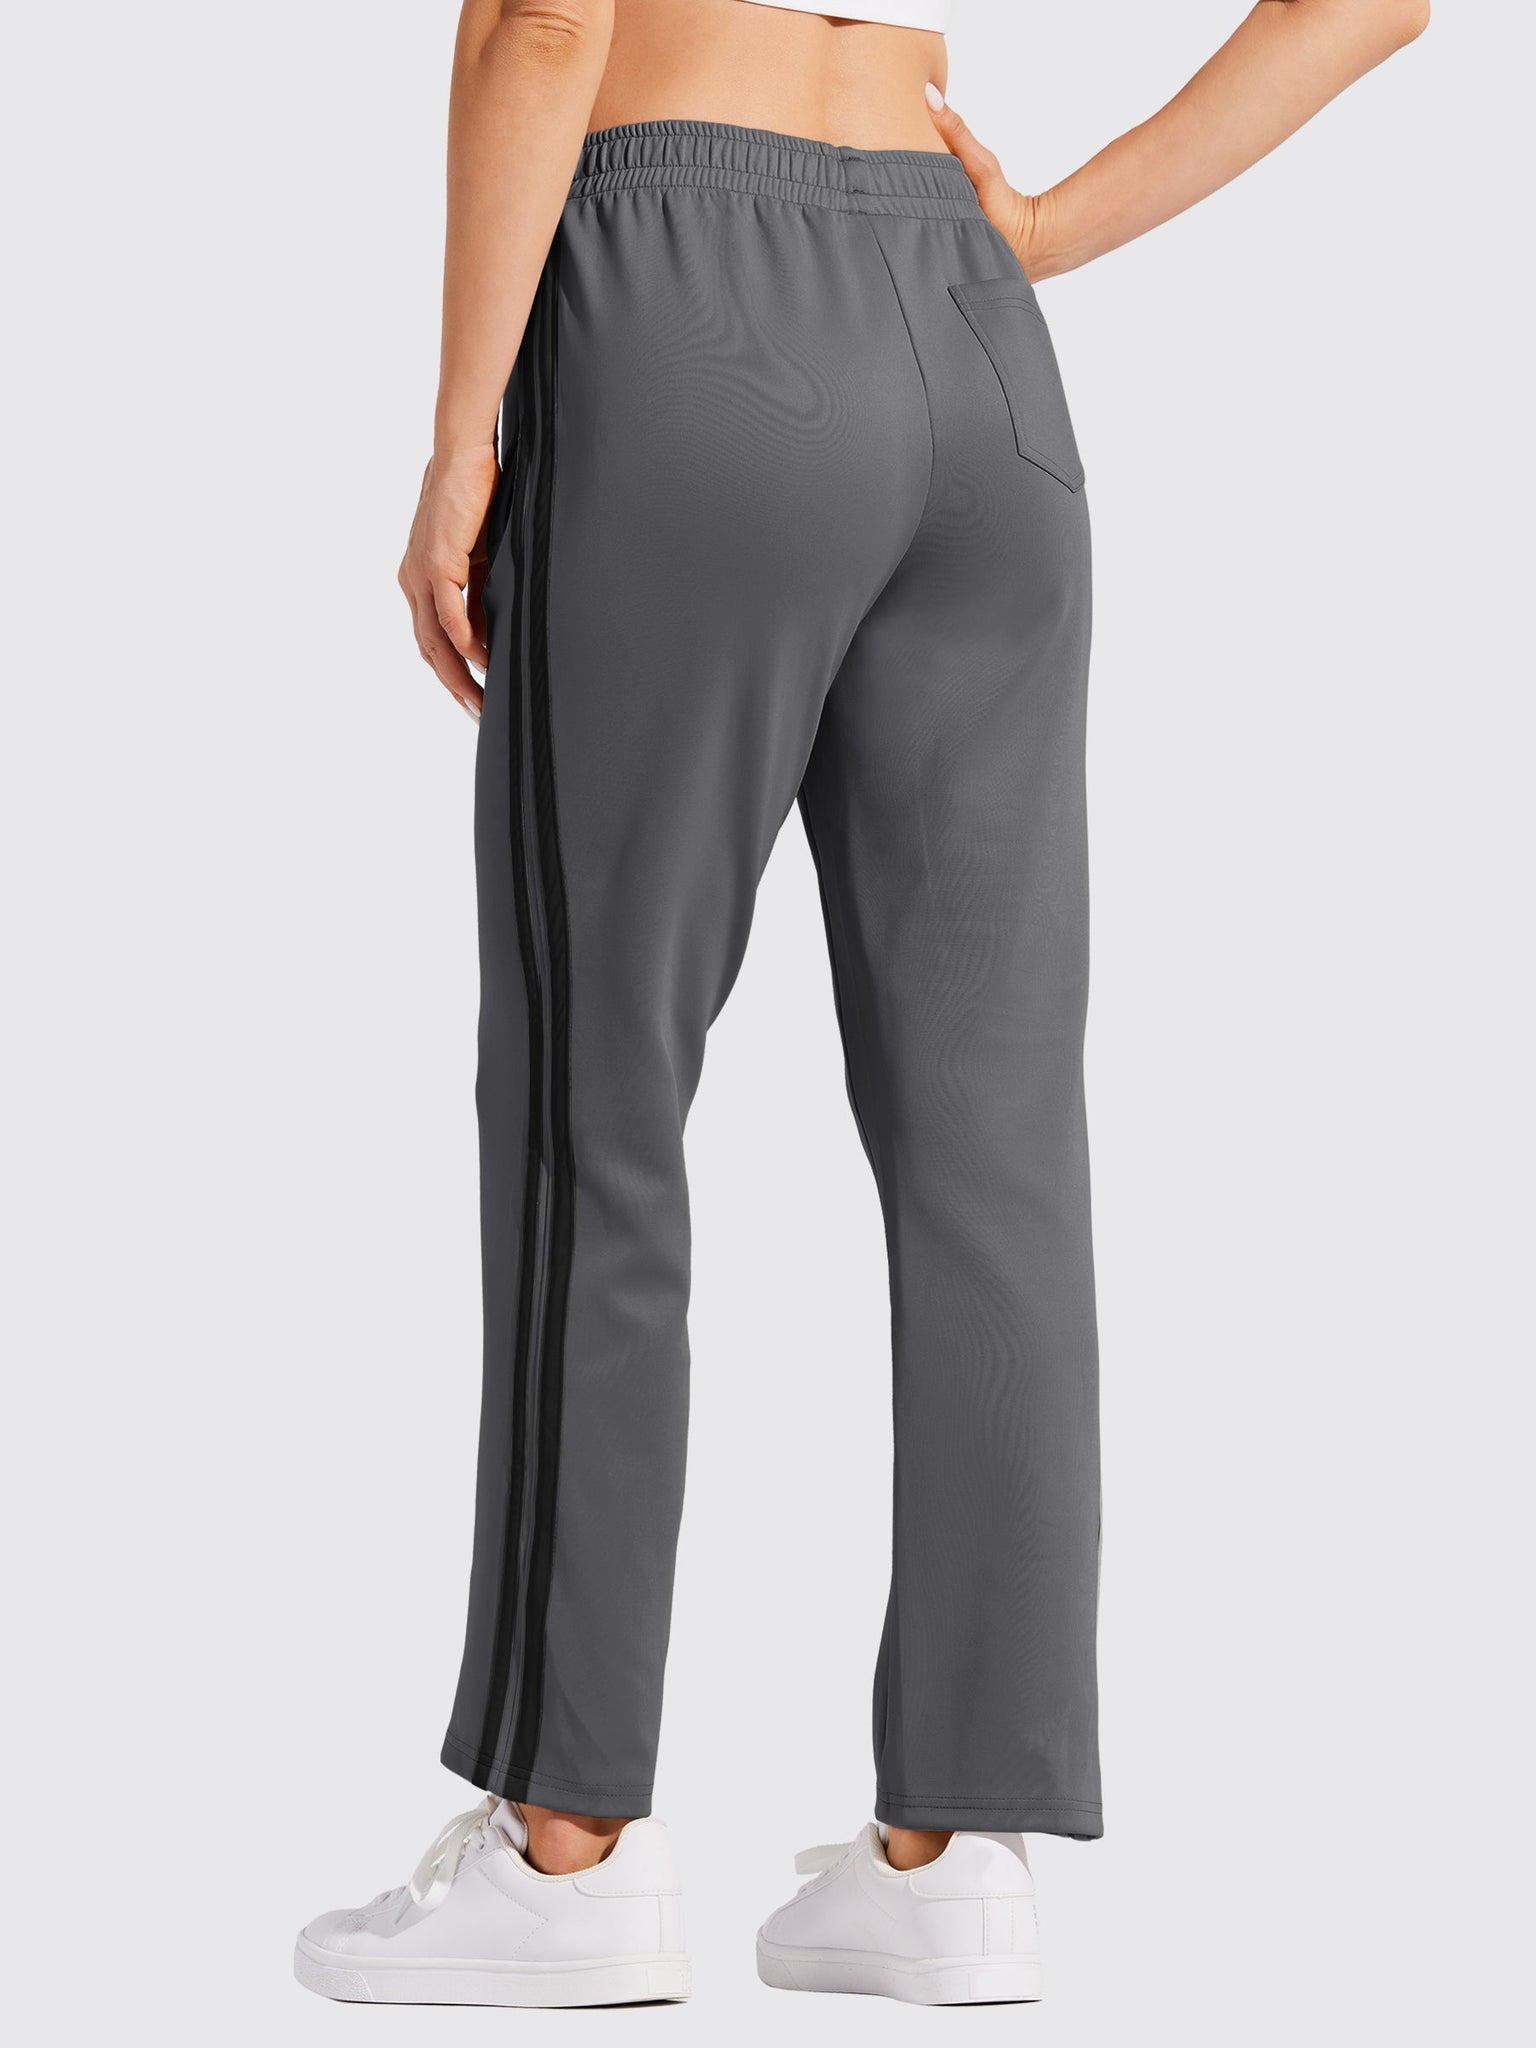 Ritsila Women's Loose Lower Comfortable Western Classy Track Pants